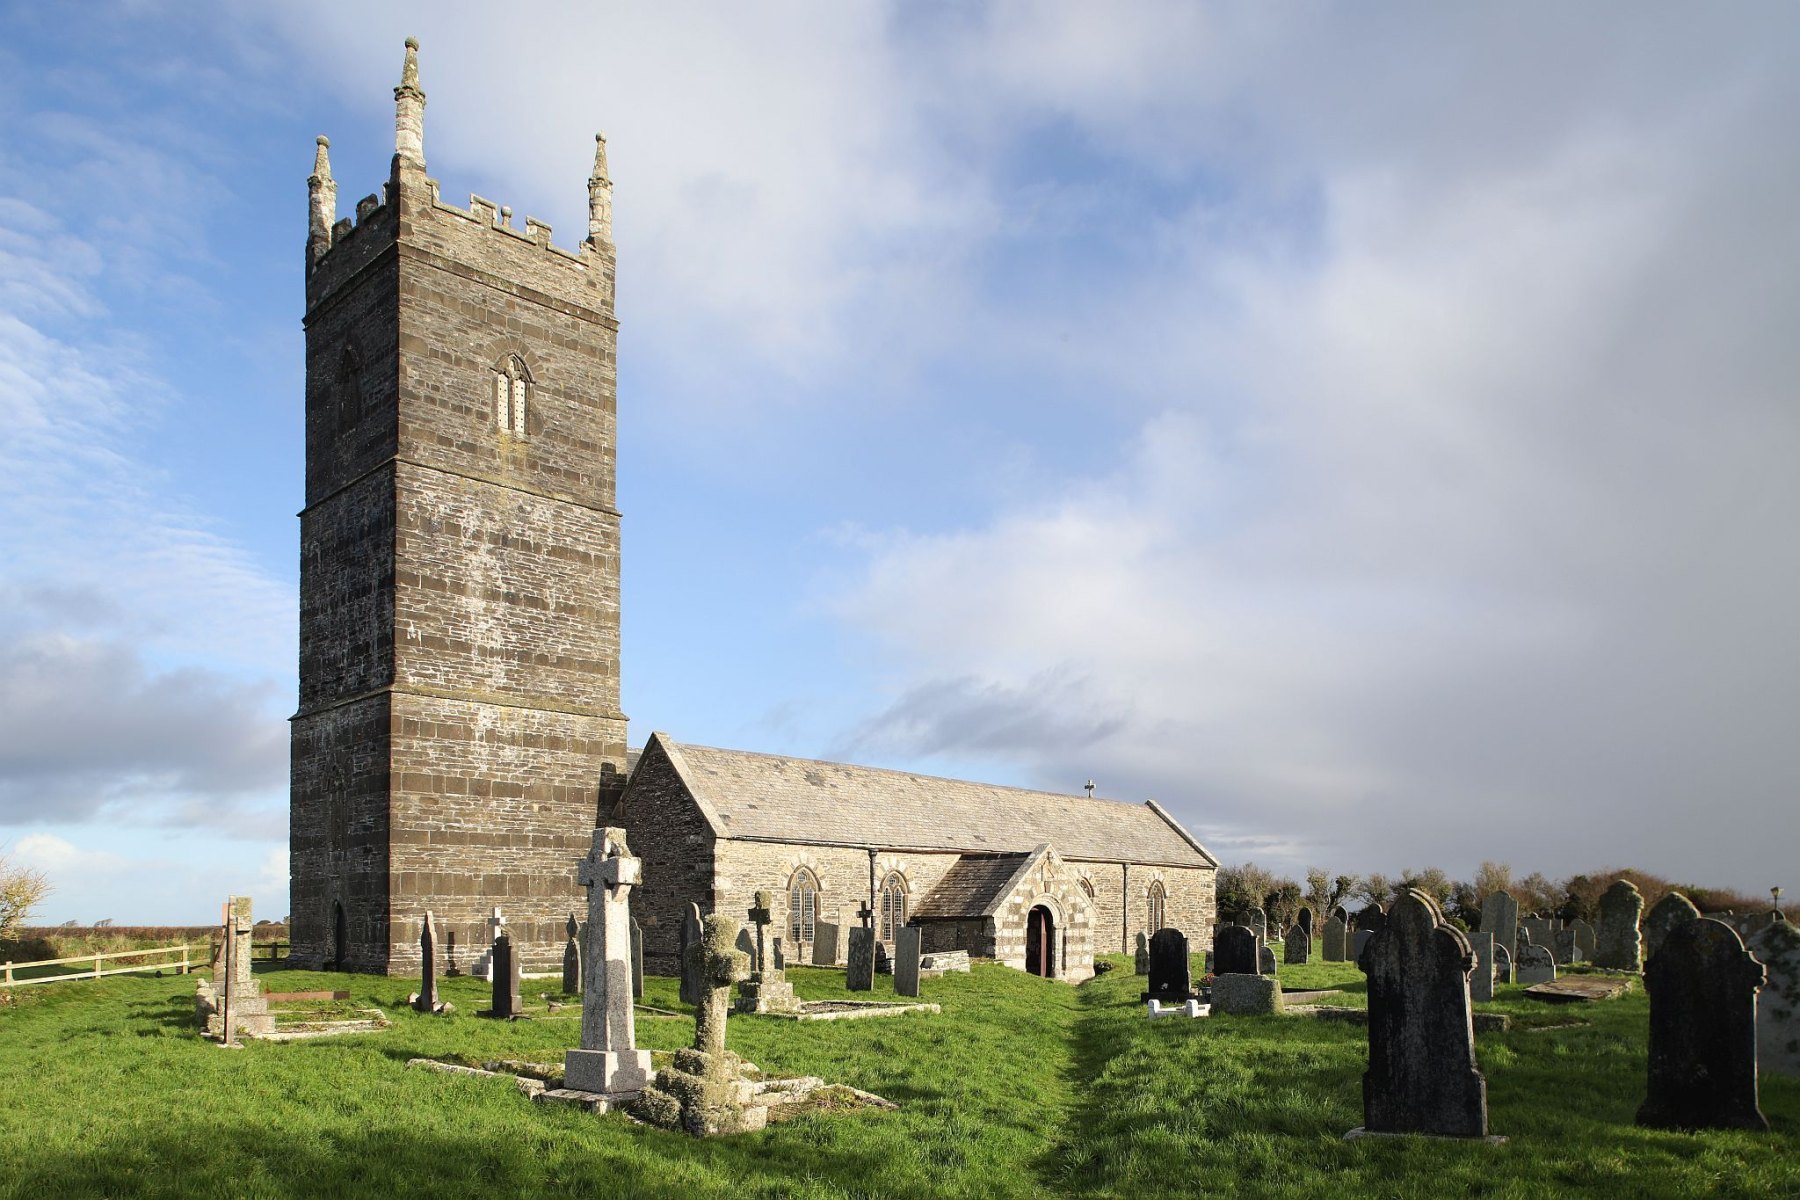 St. Eval Parish Church near Newquay in Cornwall